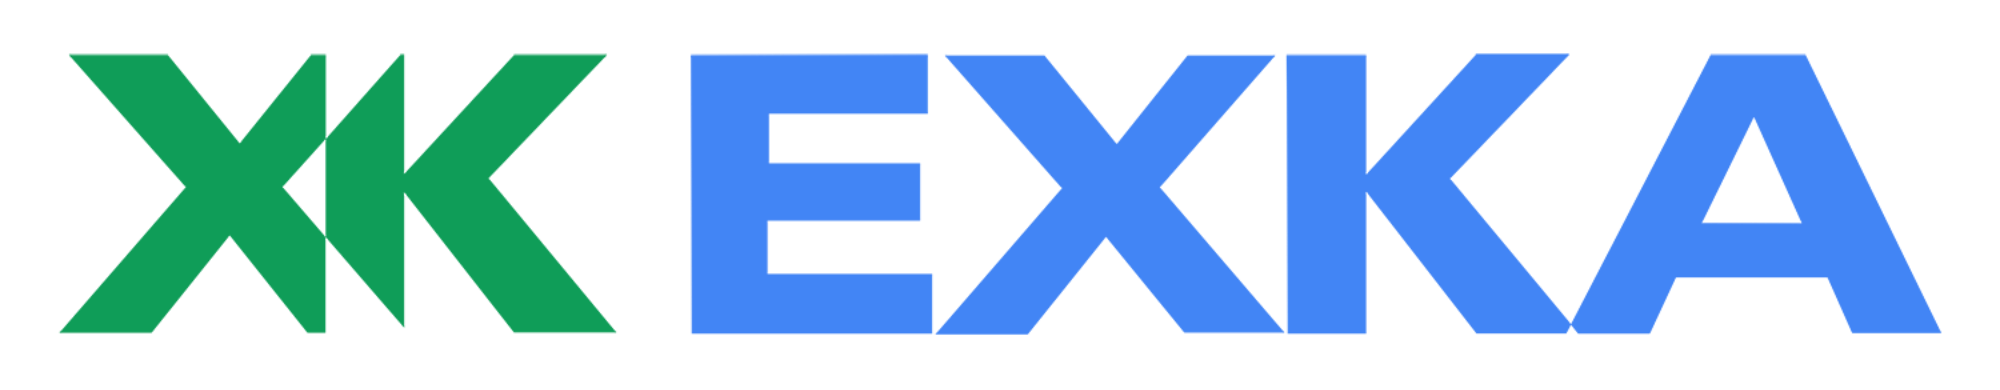 EXKA (XK) Cannabis Brand Logo